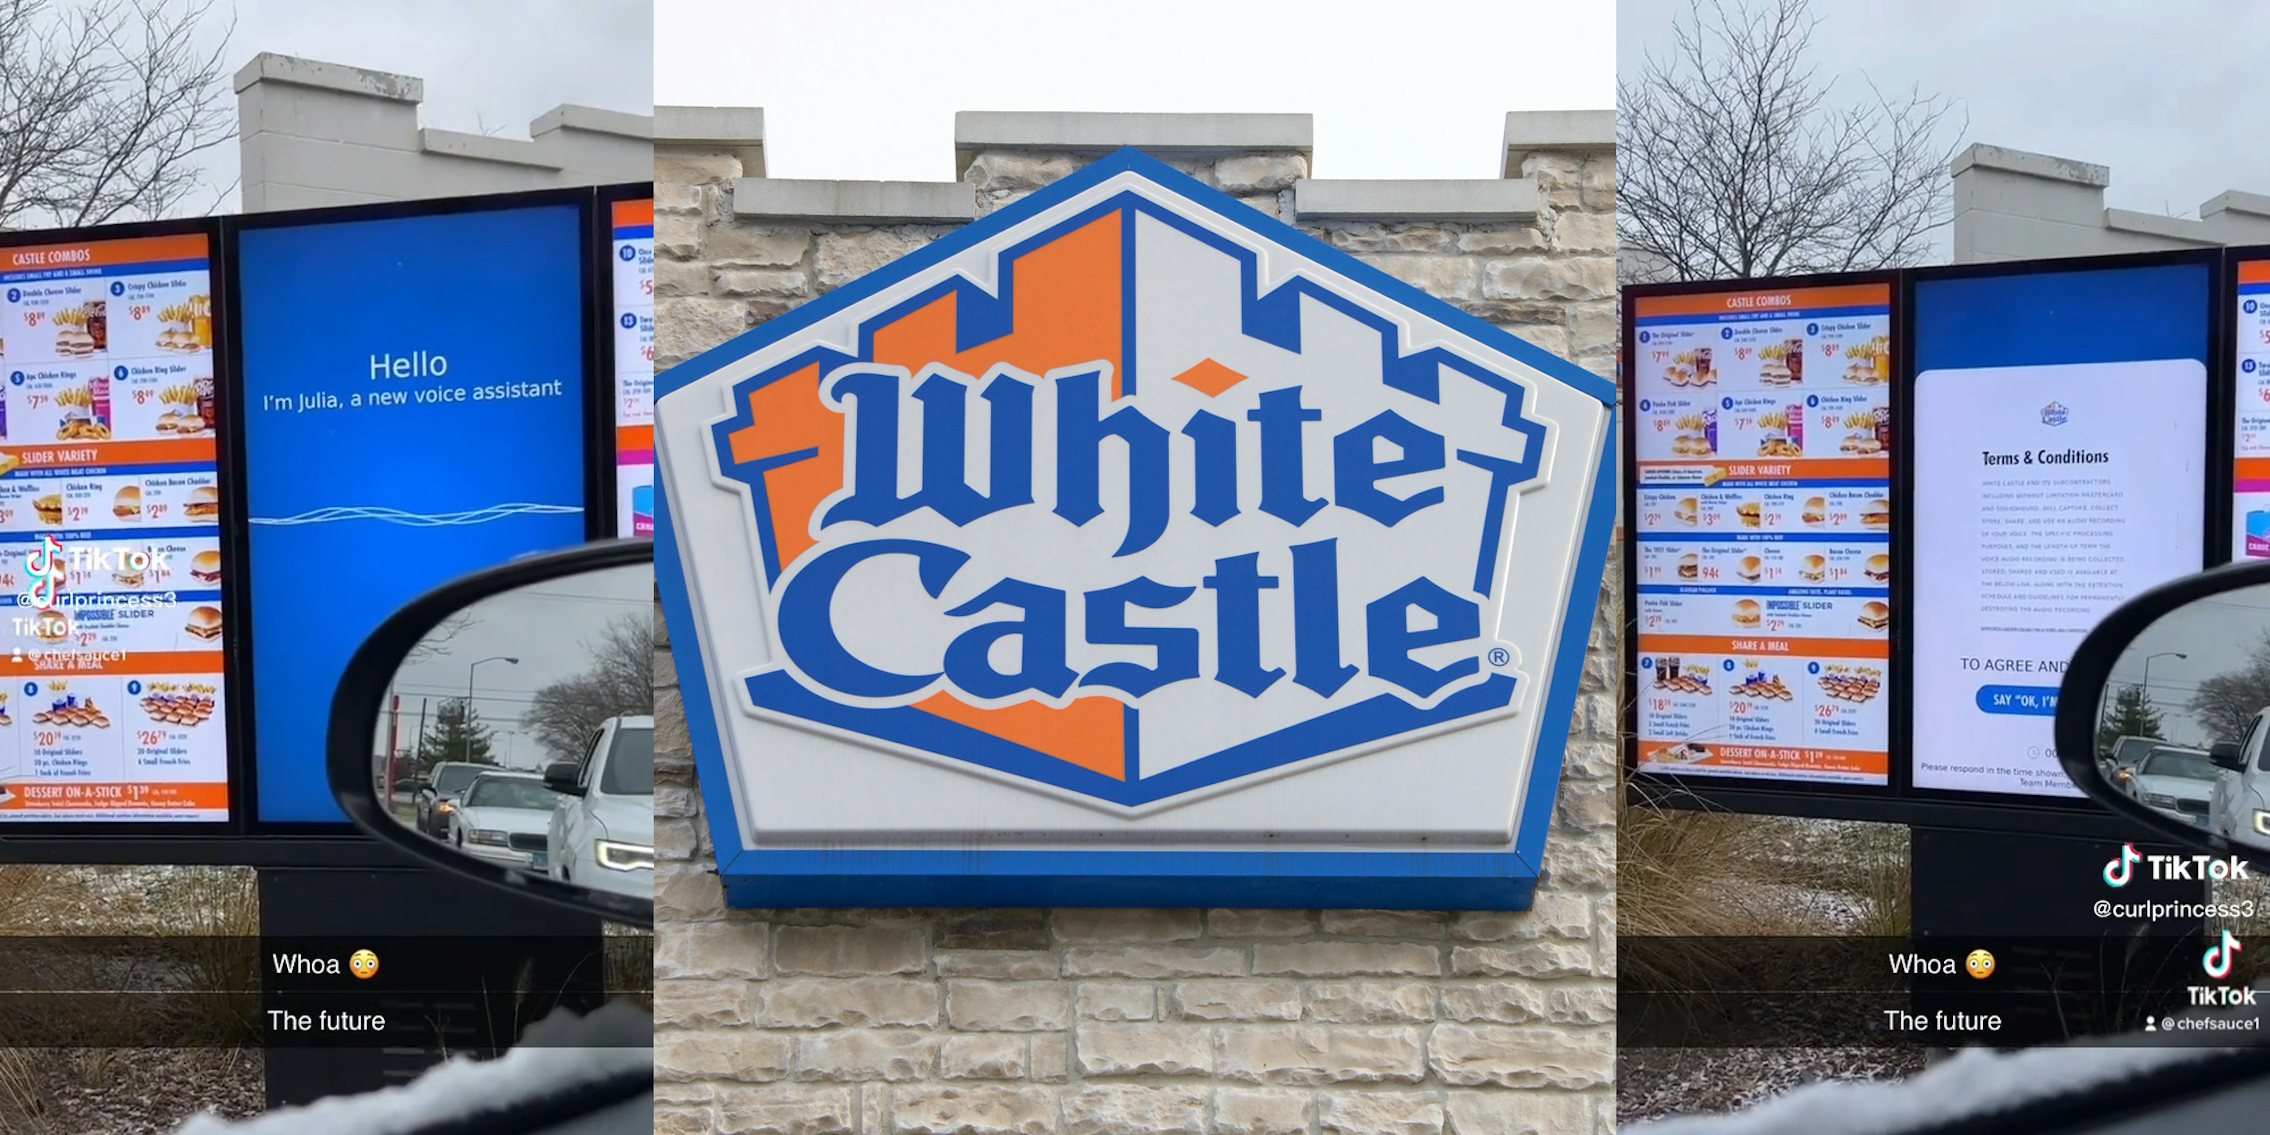 white castle drive thru menu